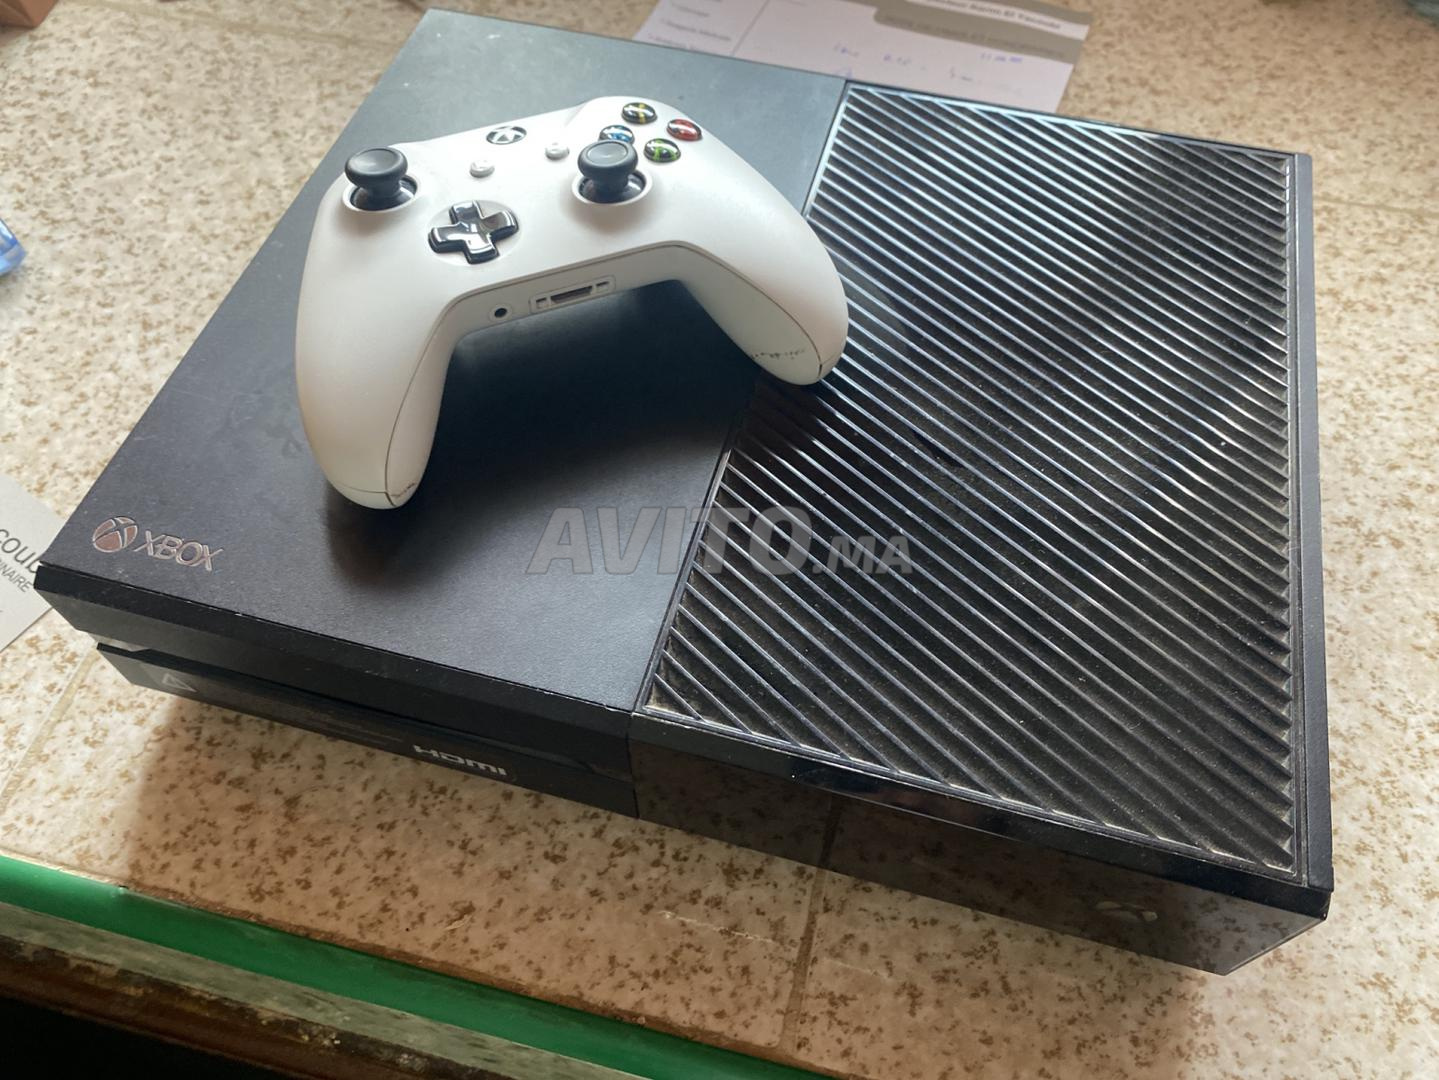 Xbox one 500g - 1